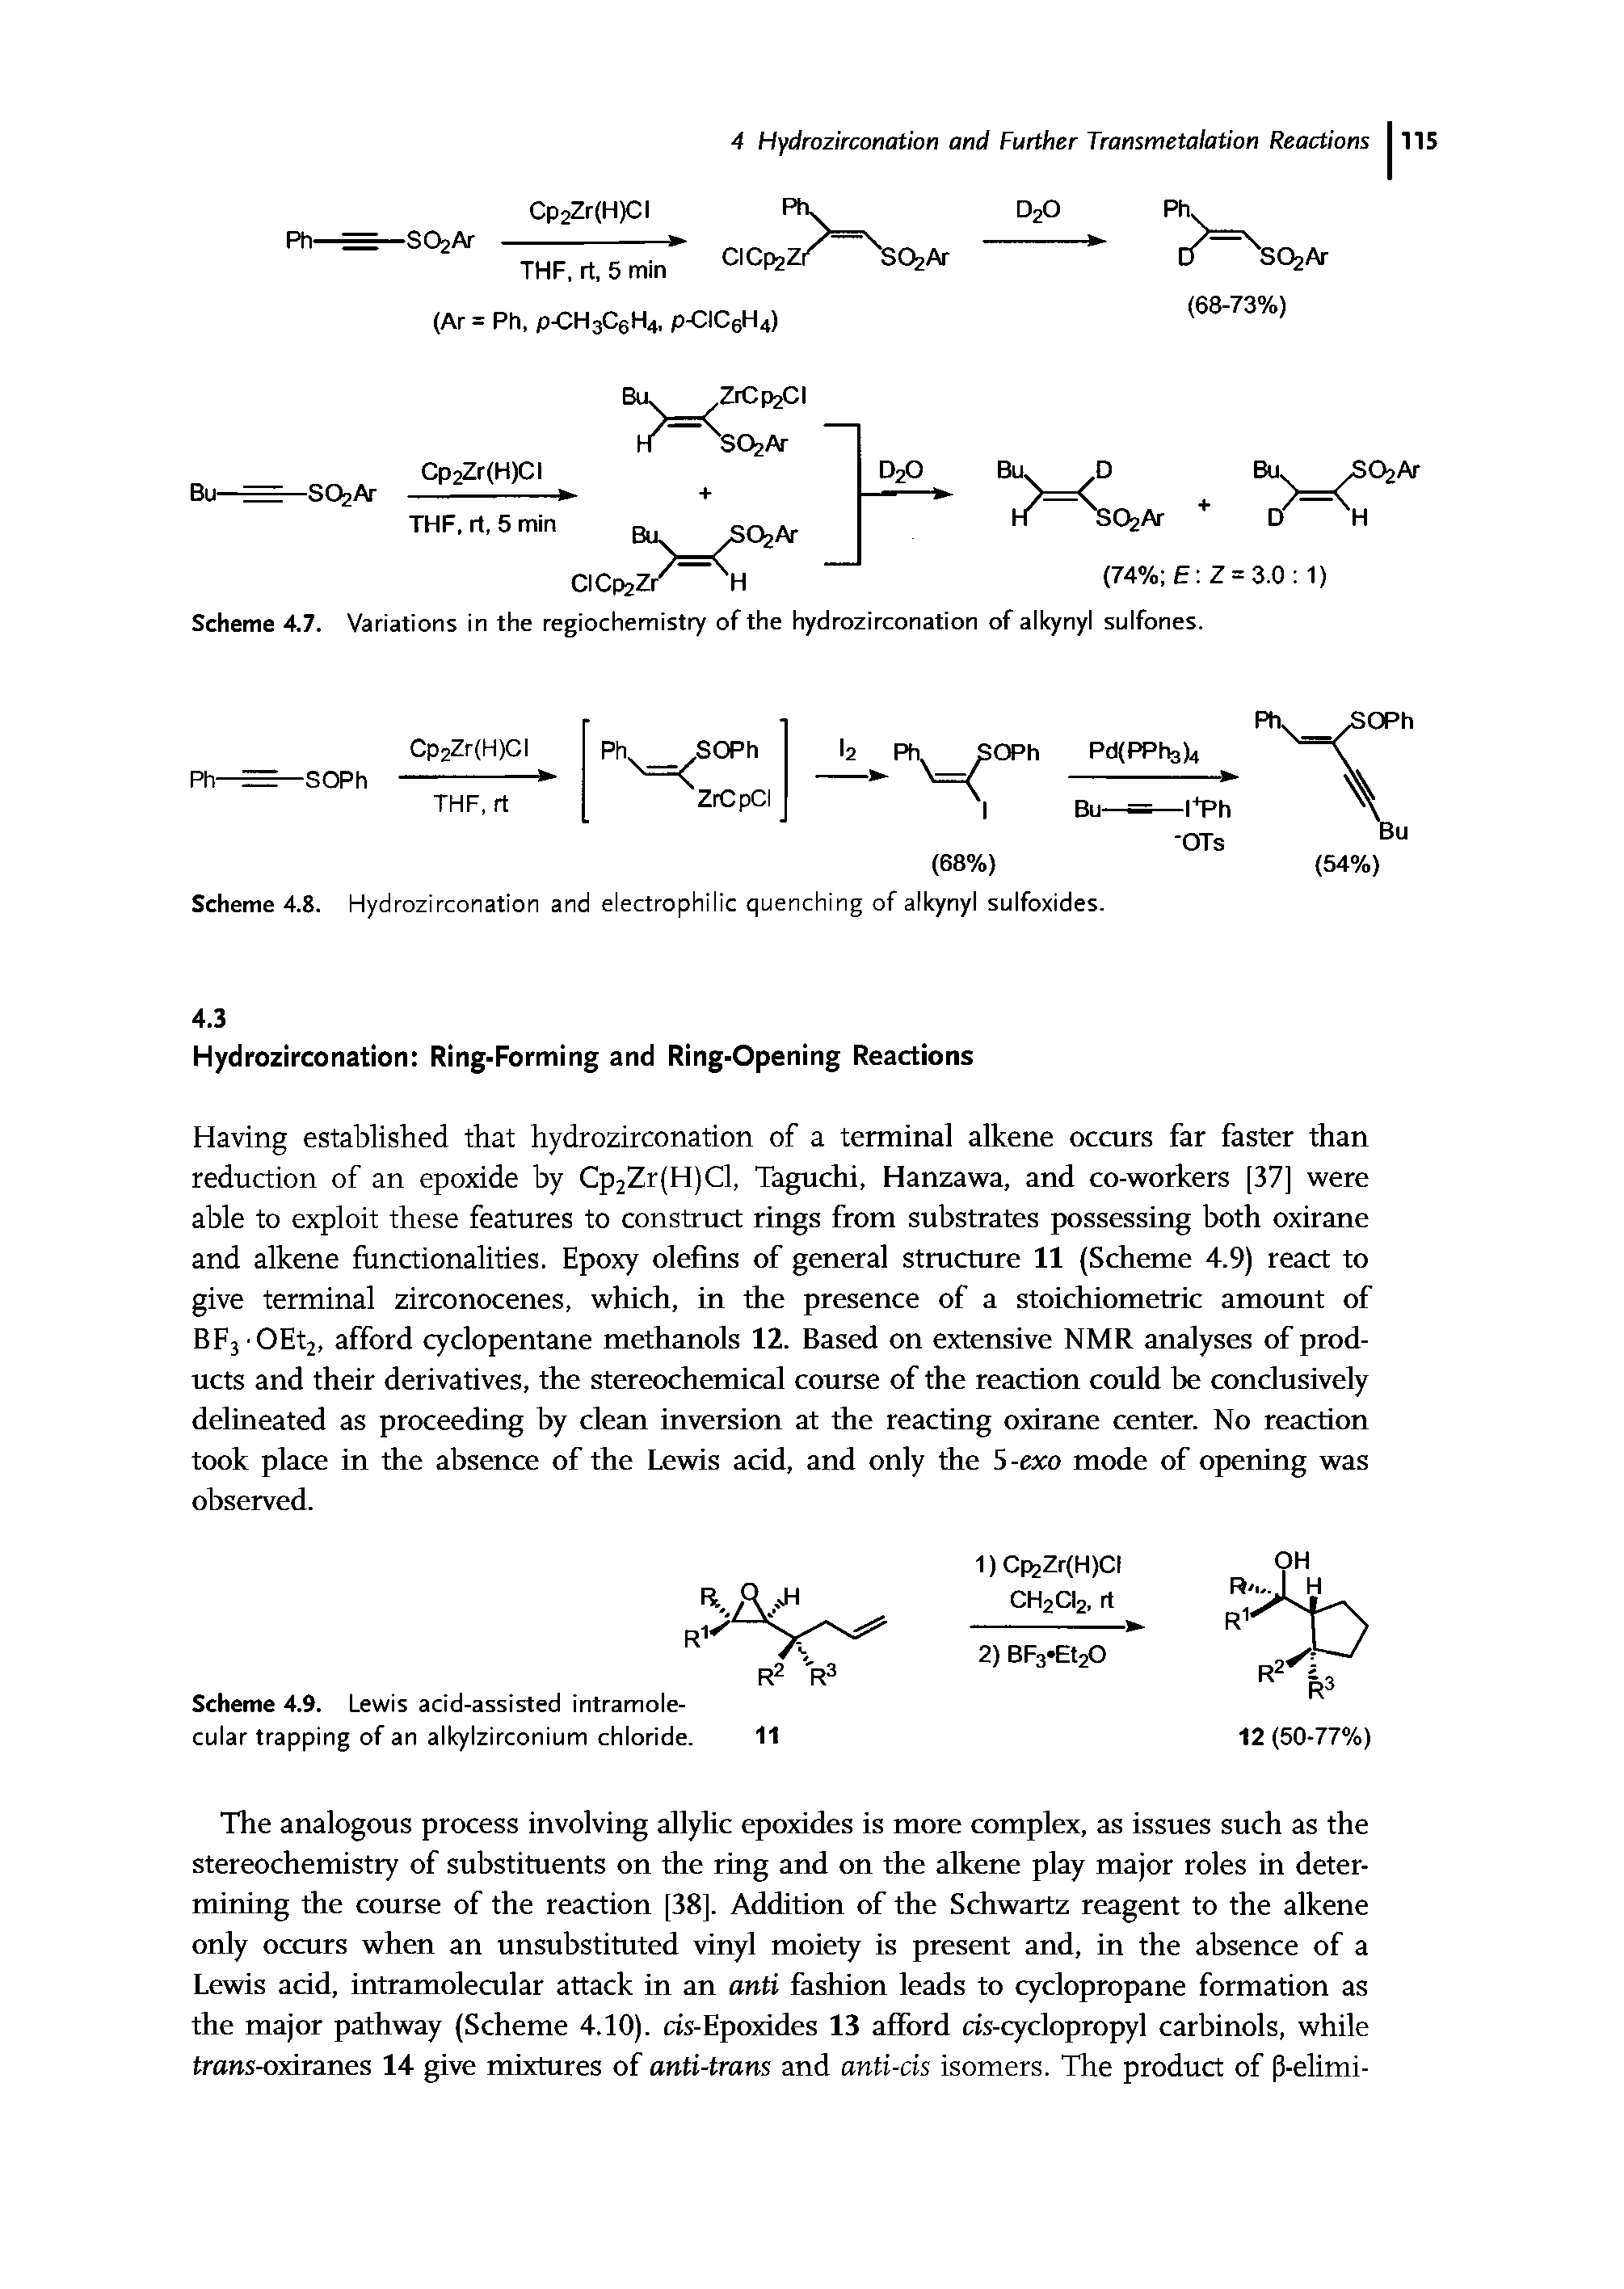 Scheme 4.7. Variations in the regiochemistry of the hydrozirconation of alkynyl sulfones.